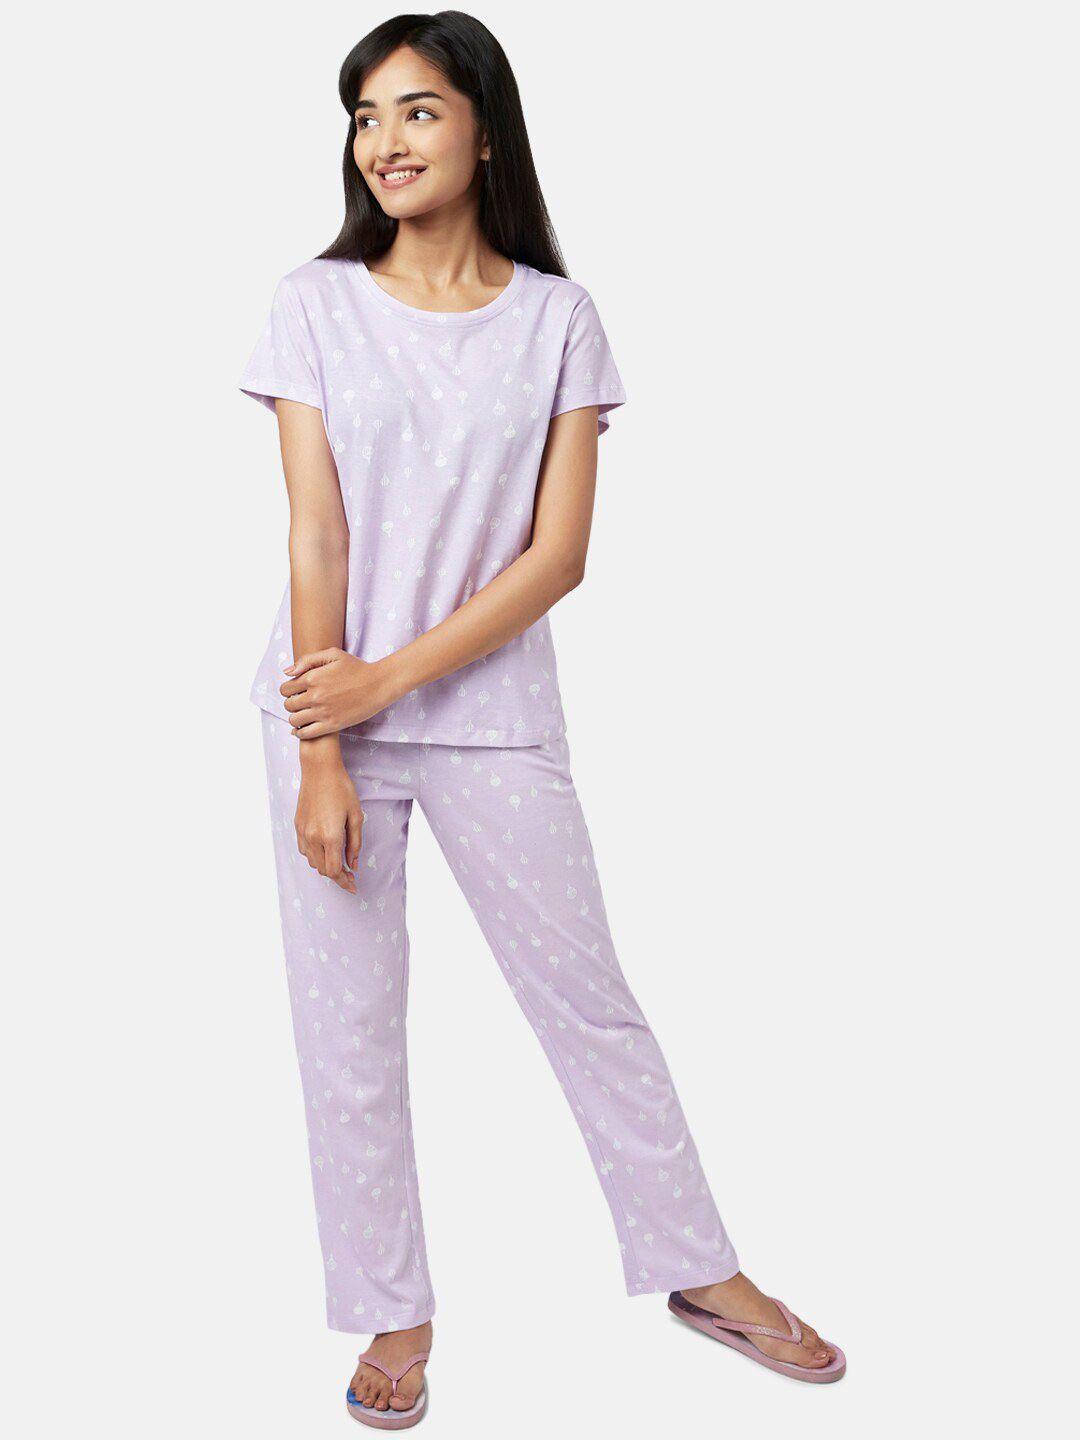 yu-by-pantaloons-women-purple-&-white-printed-night-suit